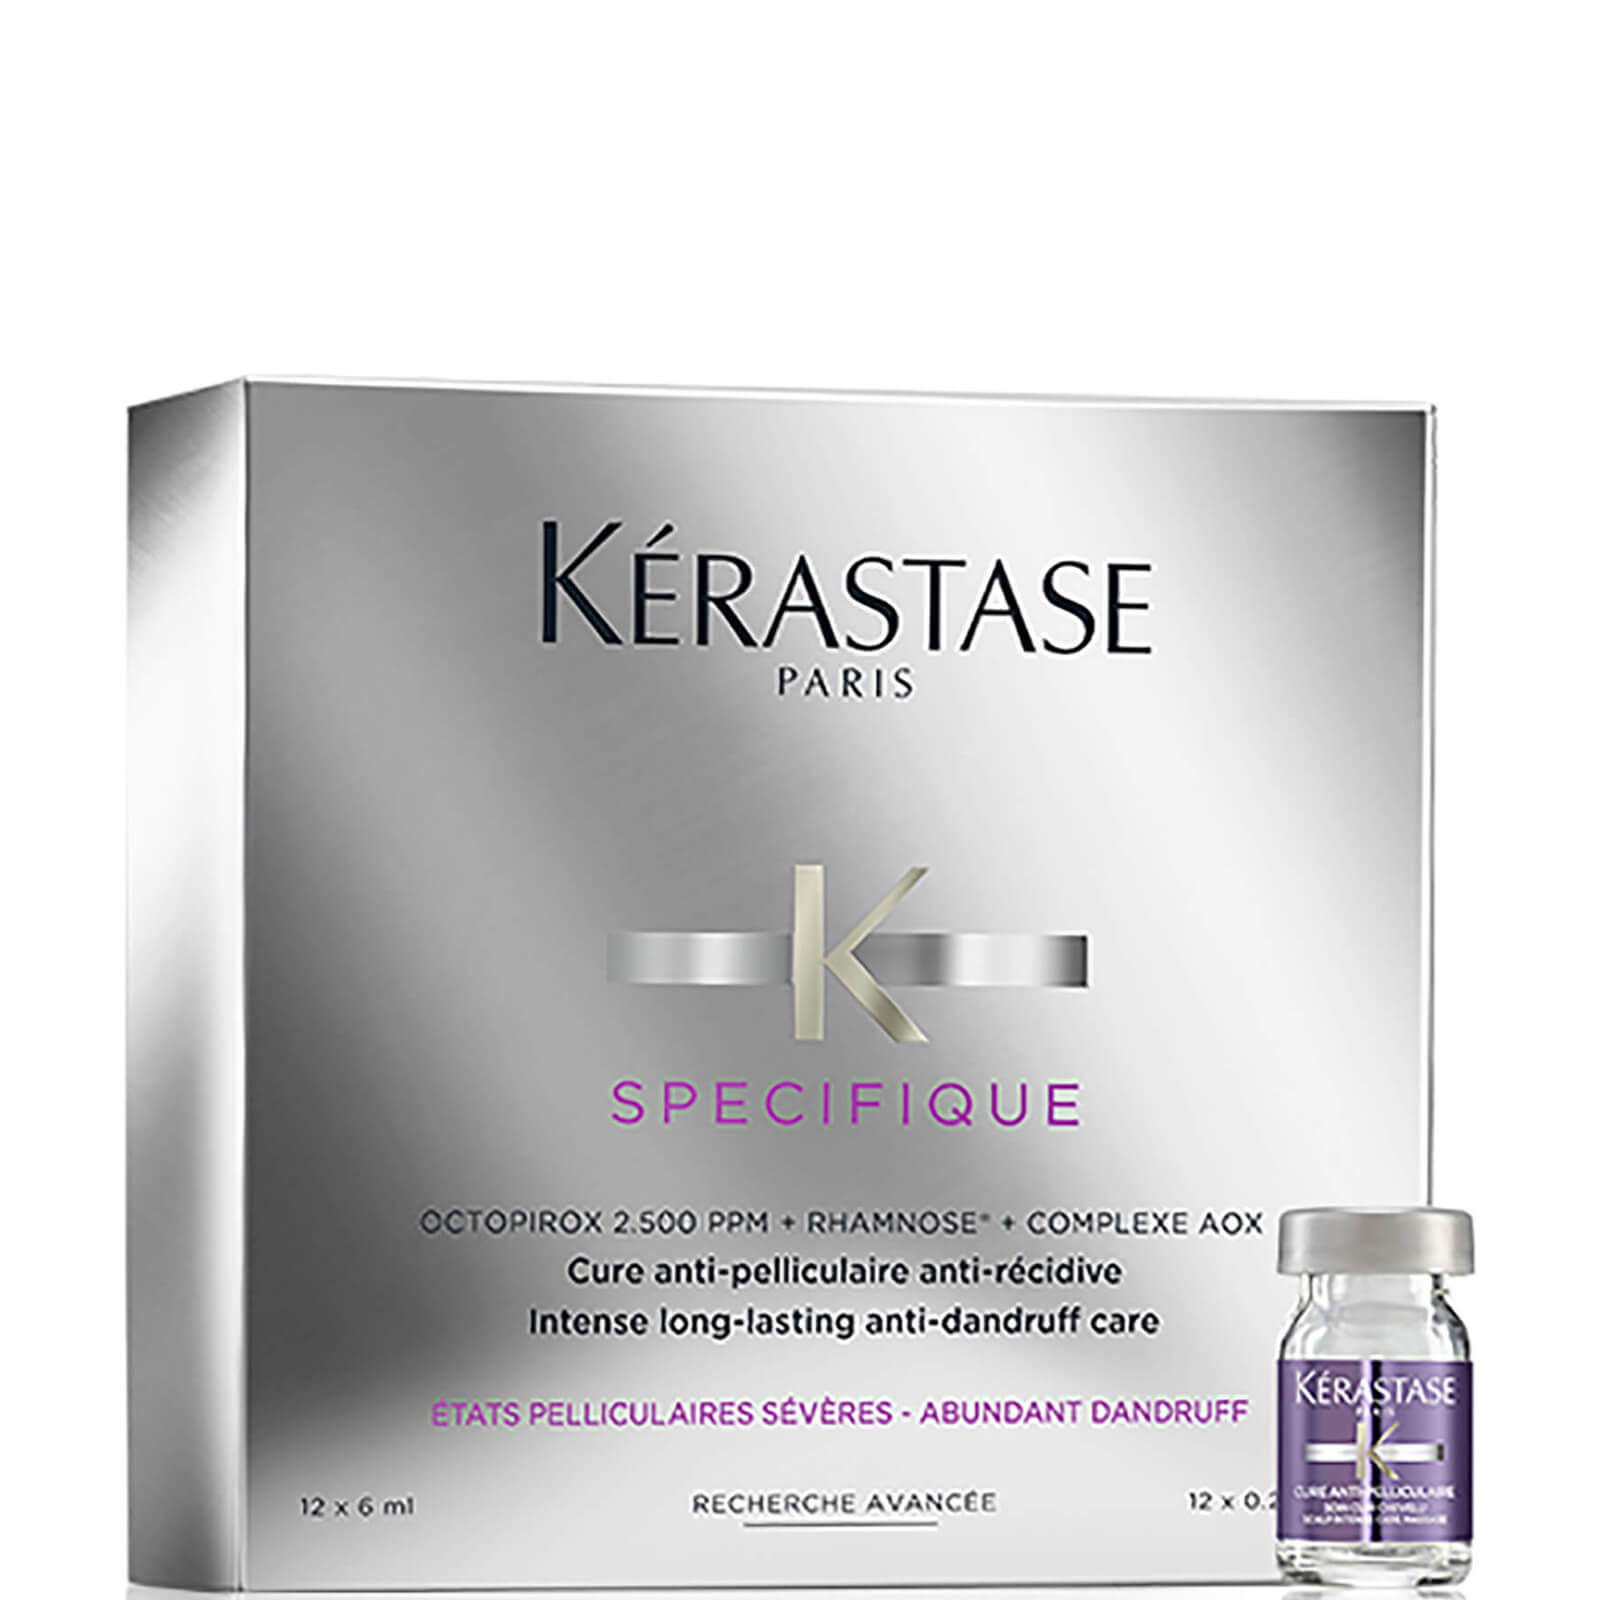 Kerastase Kérastase Specifique Cure Anti-Pelliculaire Anti-Recidive Treatment 12 x 6 ml